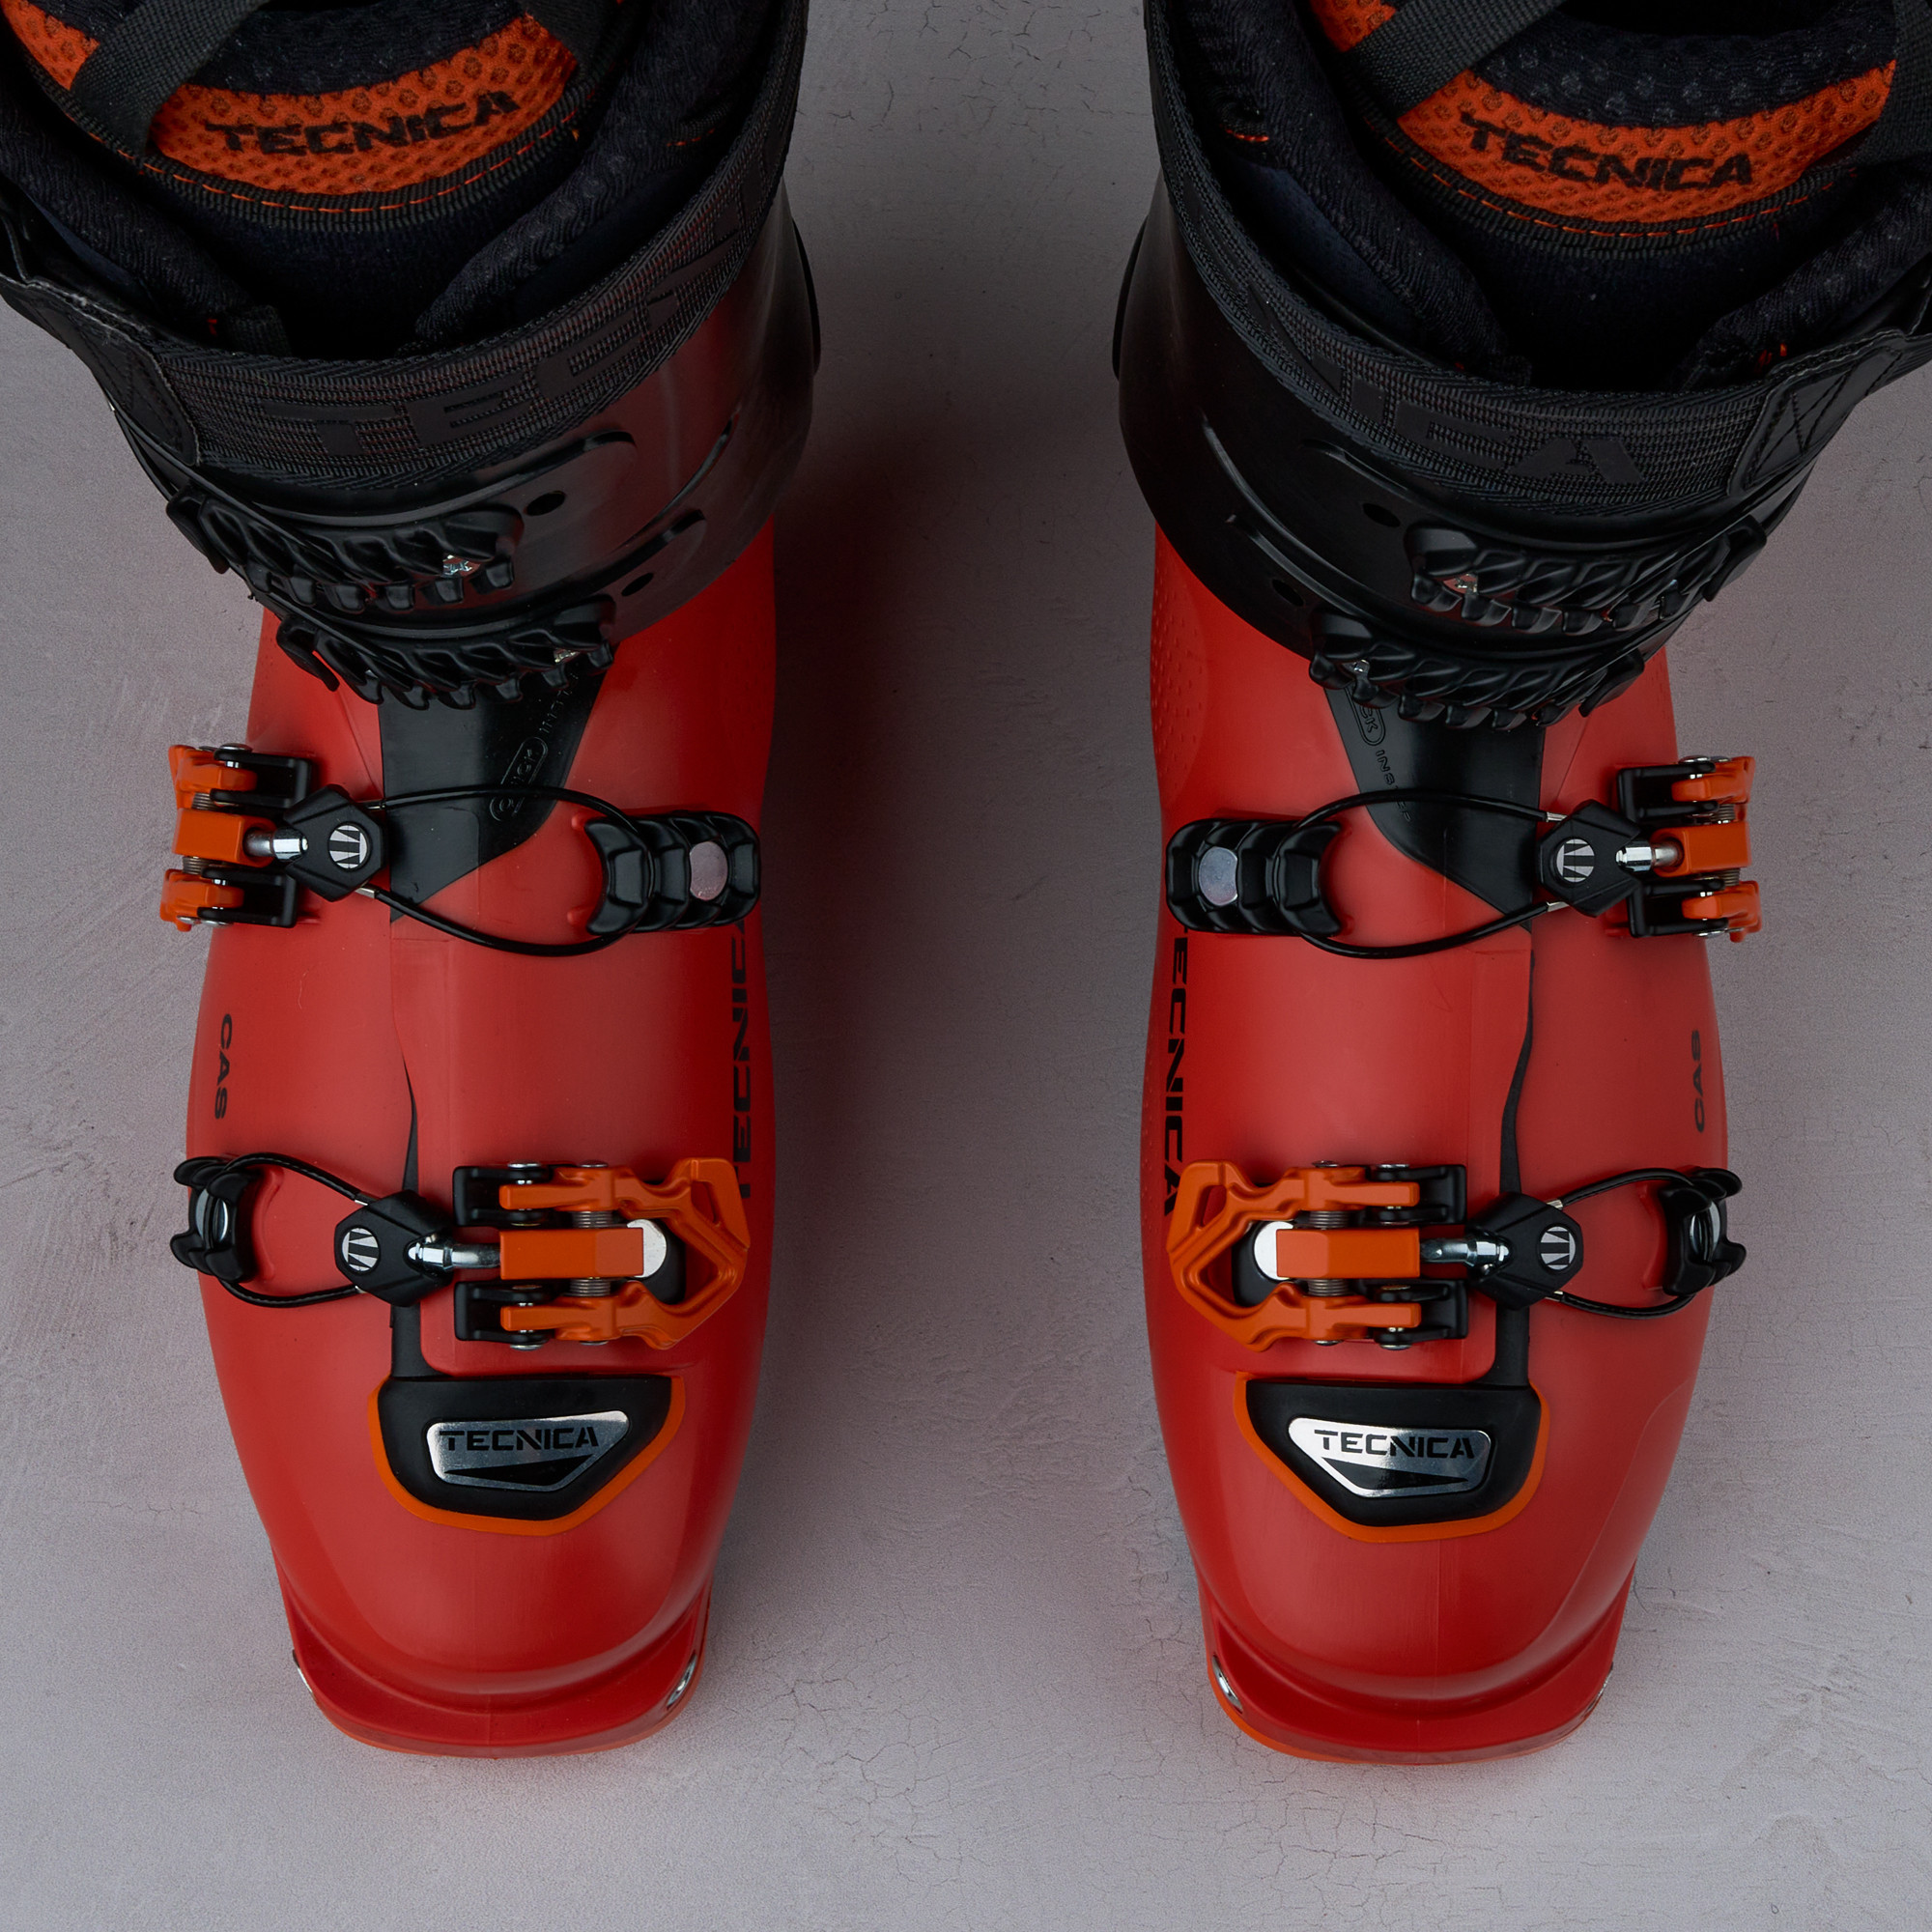 2023 Tecnica Zero G Tour Pro Ski Boots Short Review with SkiEssentials.com  